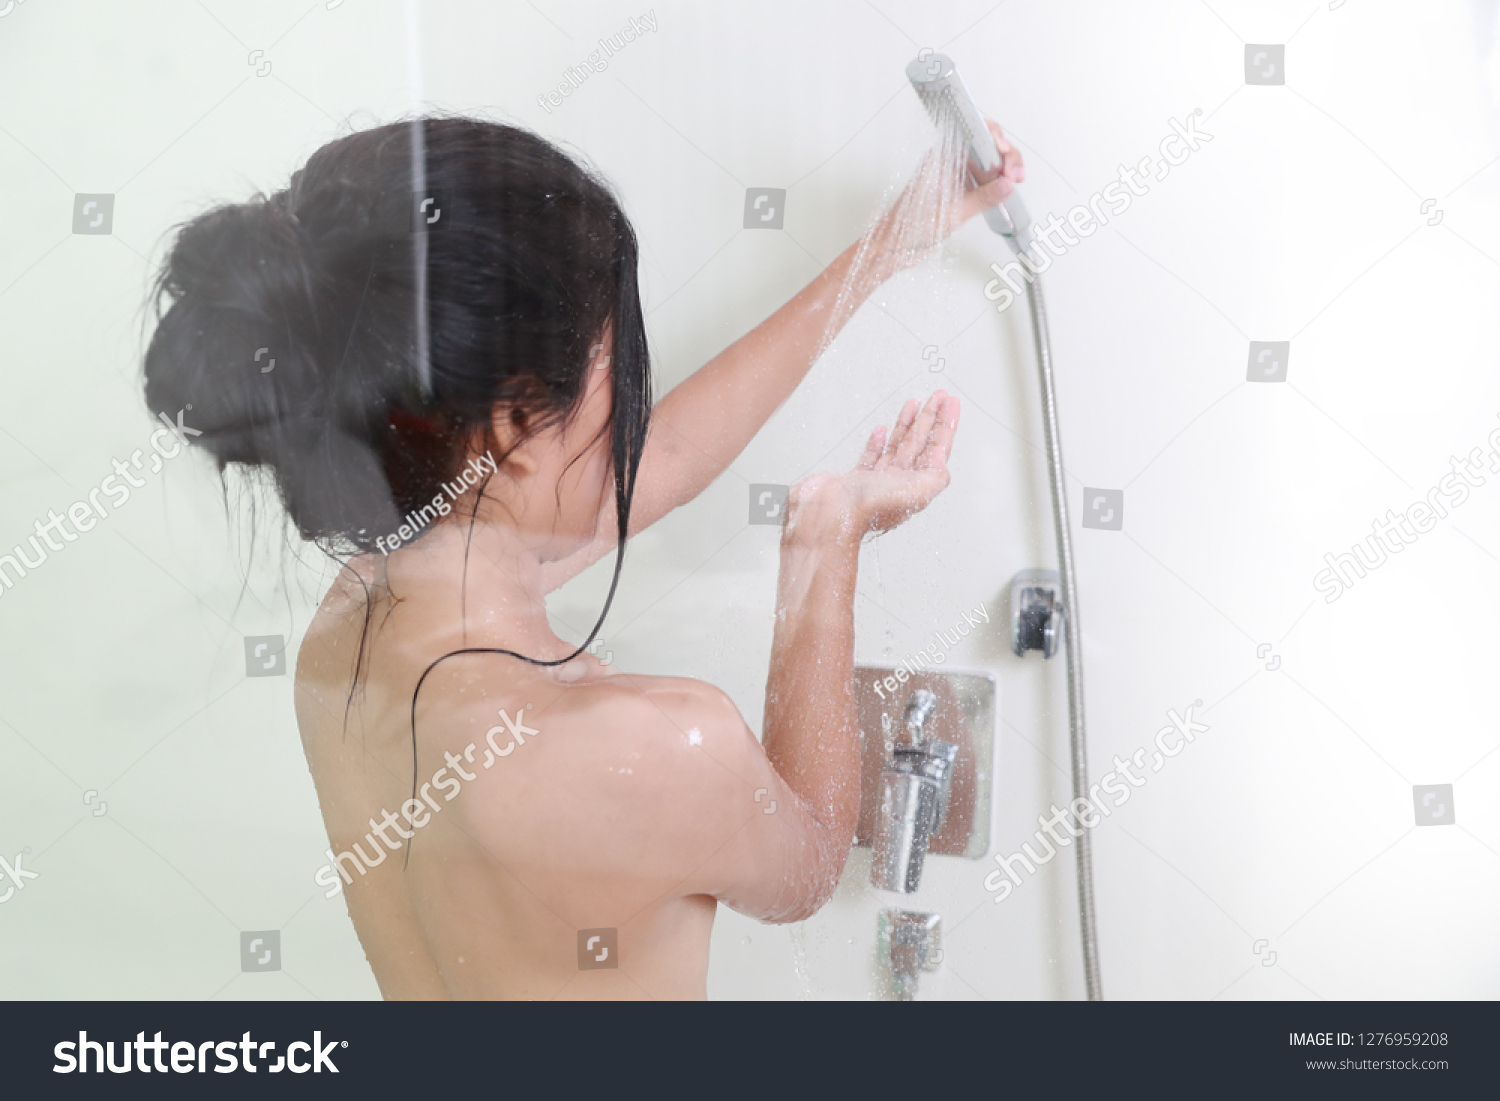 hidden camera in the shower room hd photo